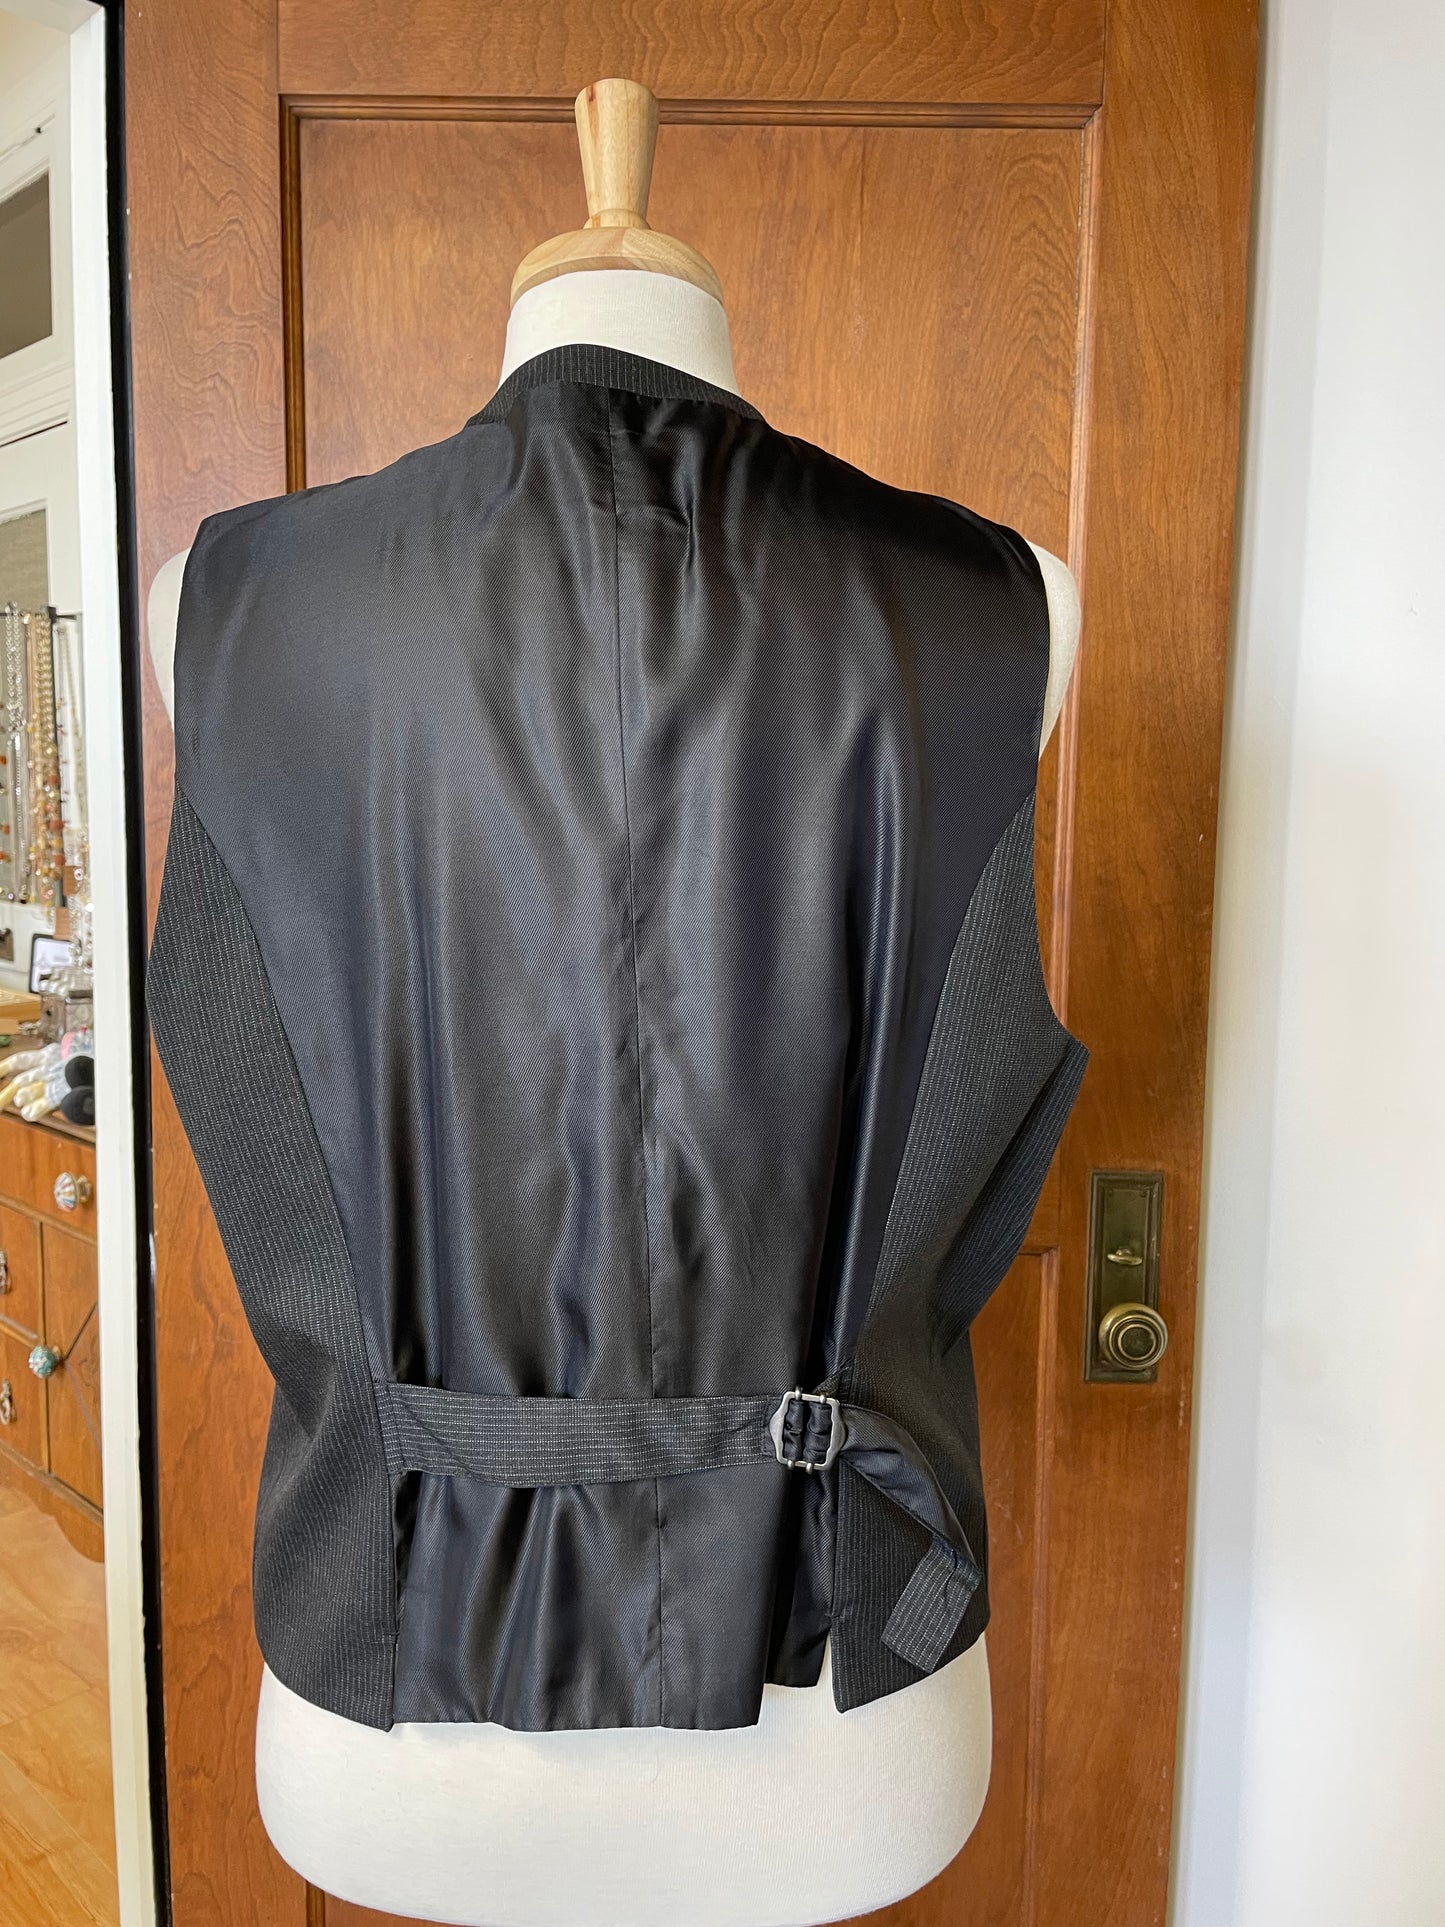 Perry Ellis Slim Fit Stretch Black Pocketed Suit Vest (XXL)